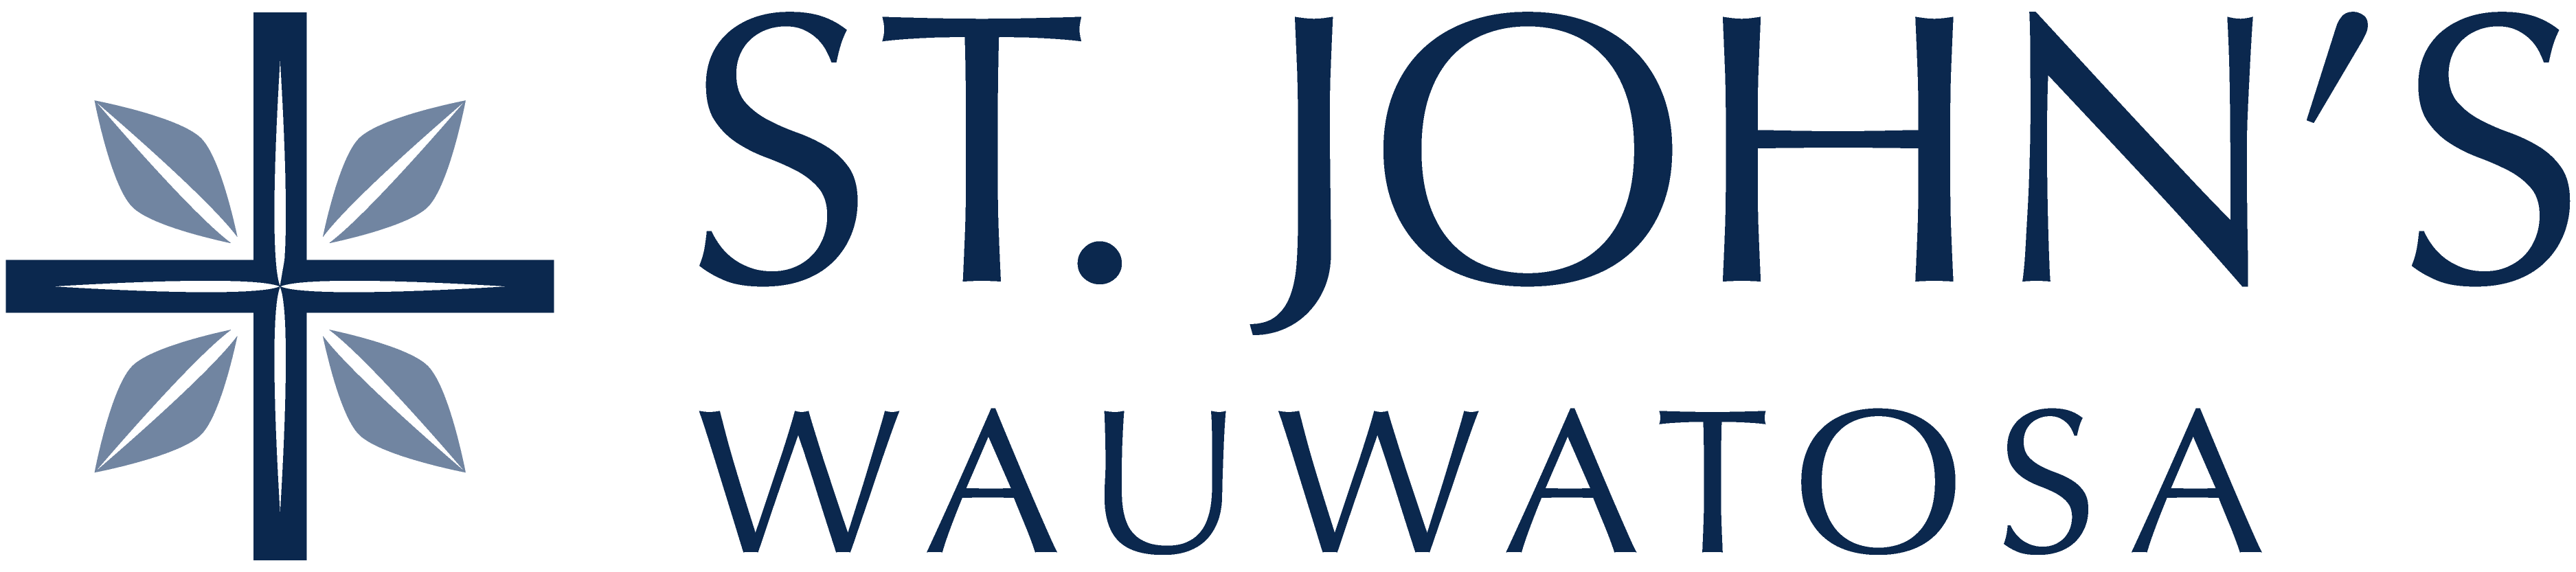 logo-wauwatosa-horizontal-large-color